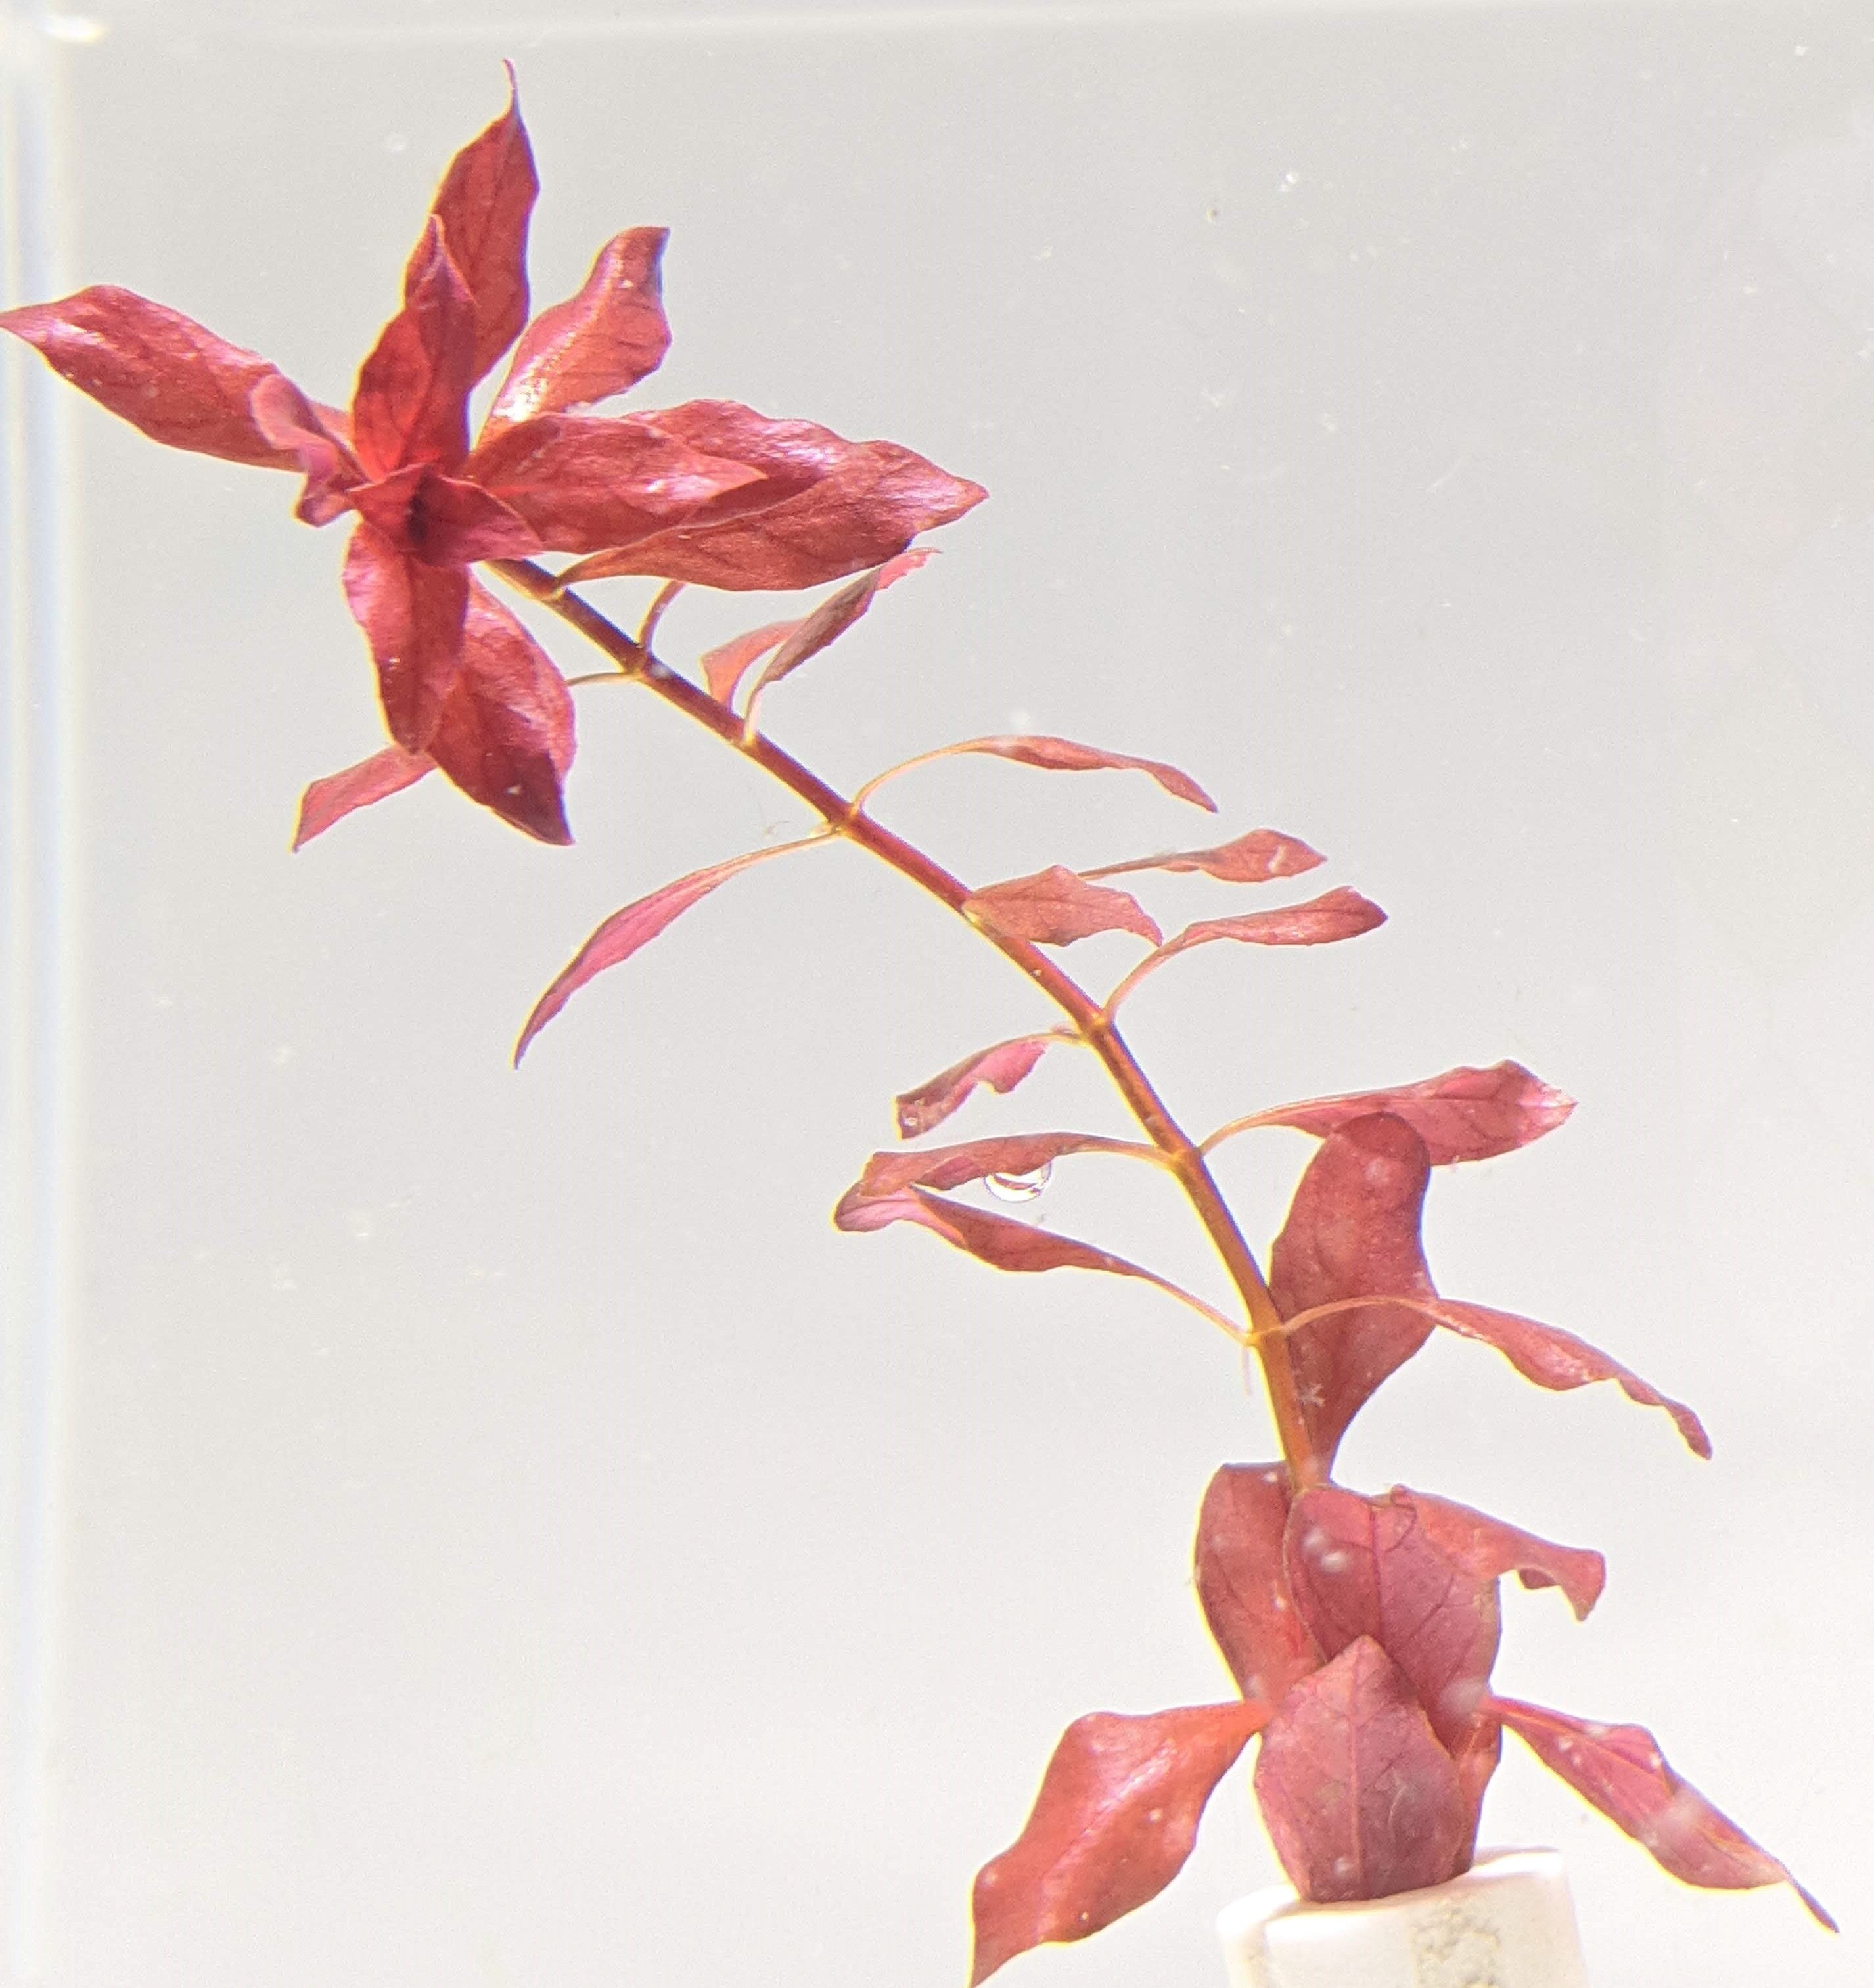 Red Ludwigia Palustris, Aquarium Plants for beginner, Red Freshwater Plant